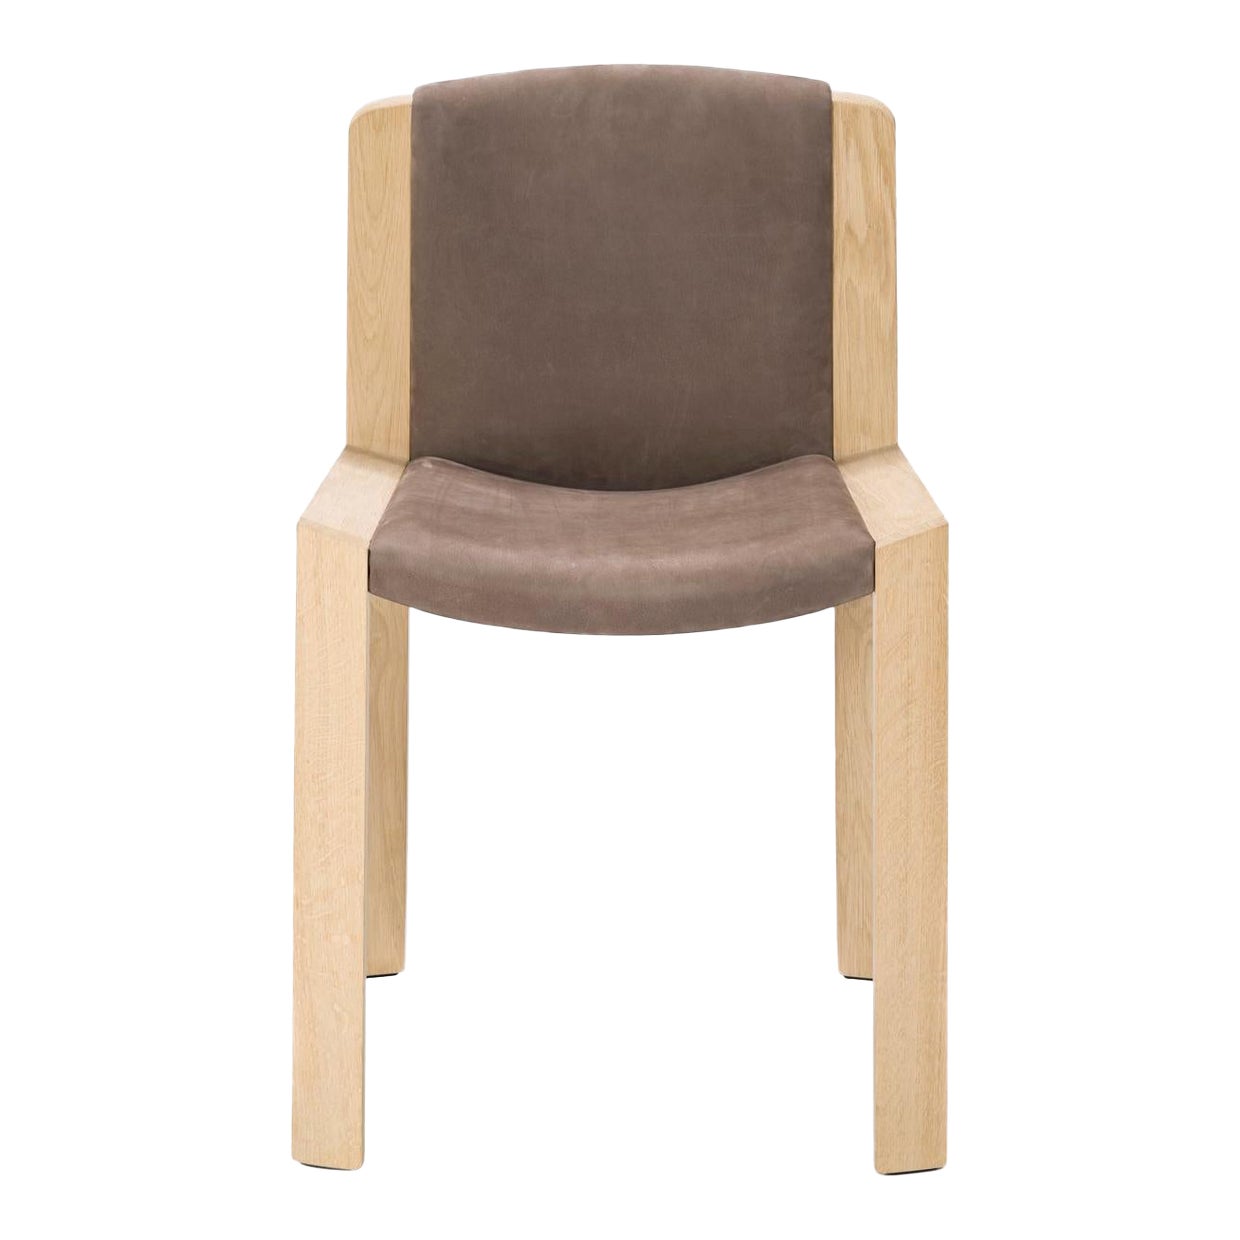 Joe Colombo 'Chair 300' by Karakter For Sale